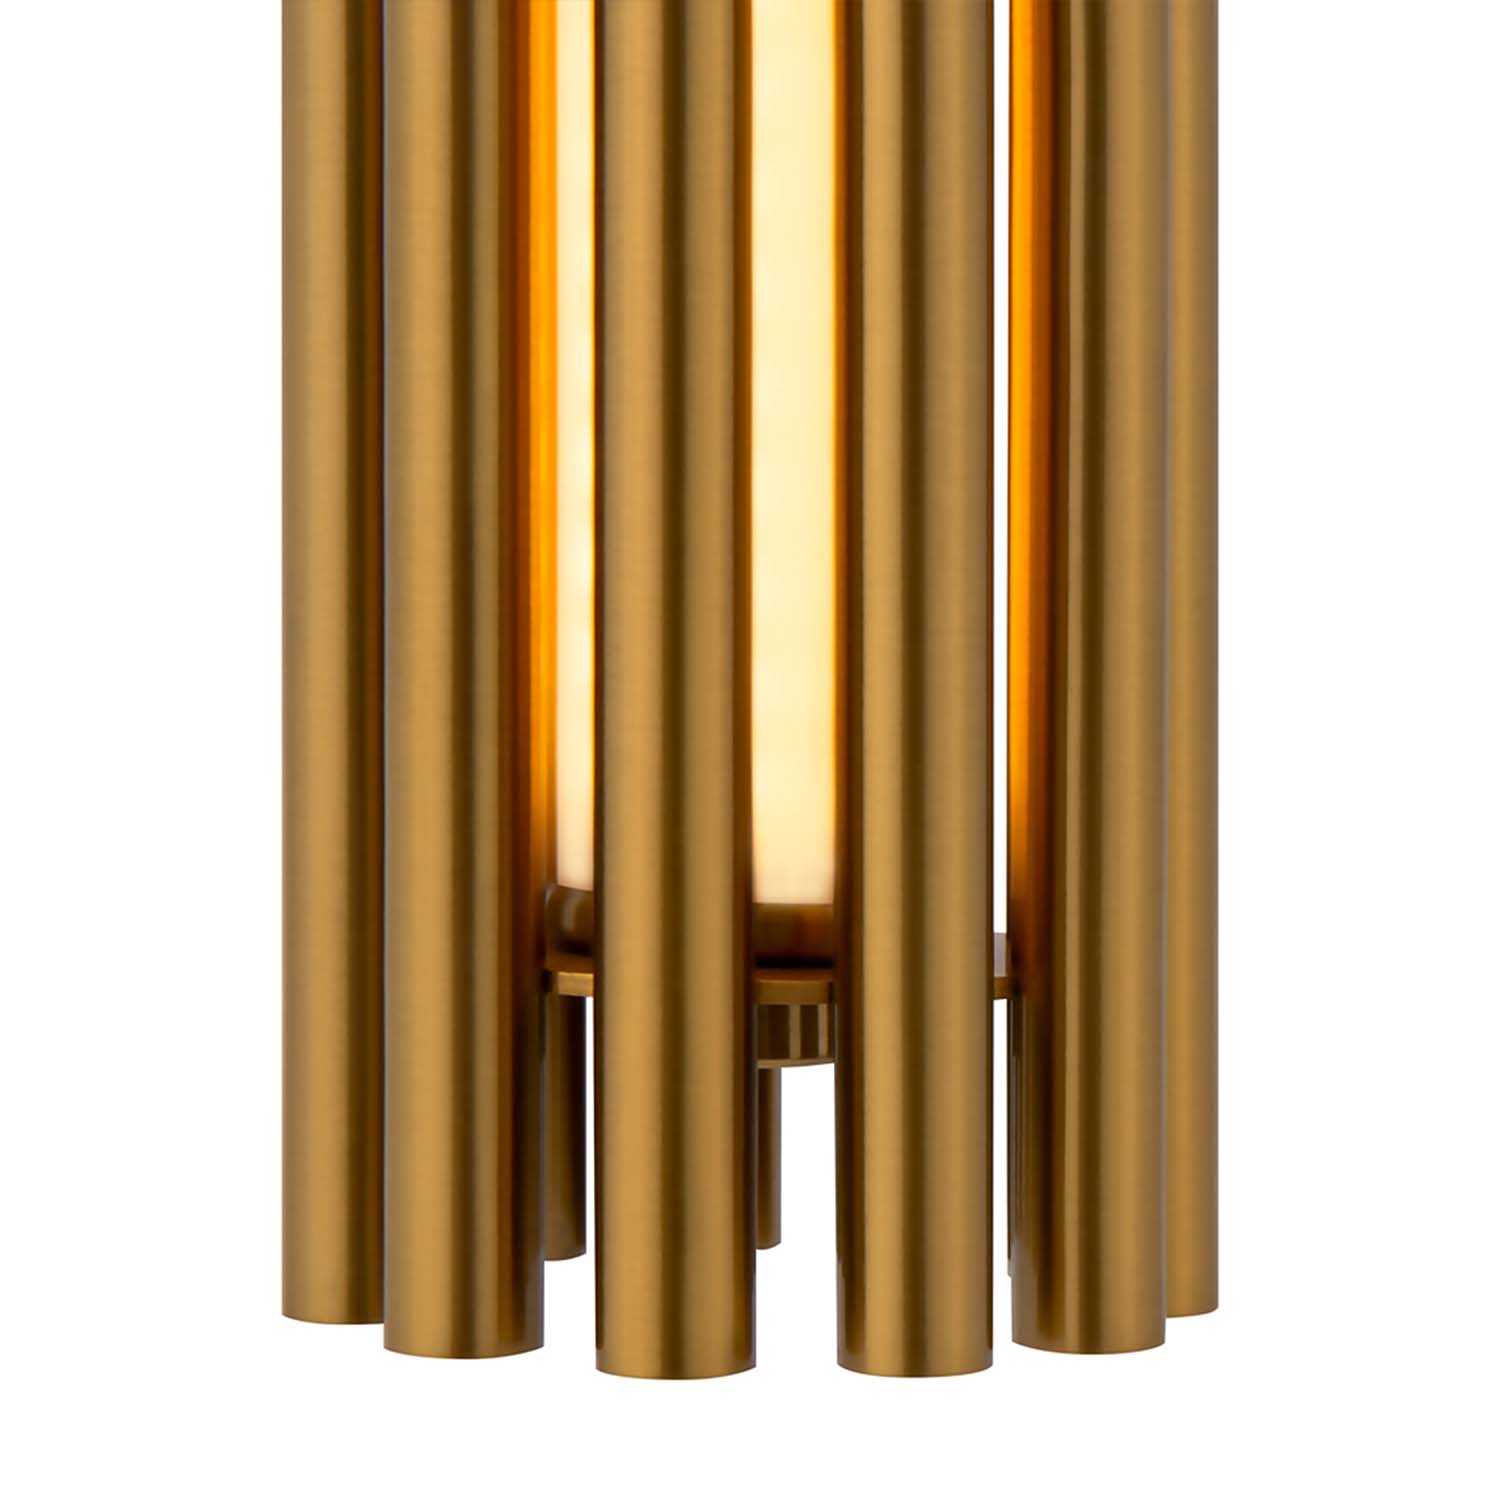 SONATA - Modern design pendant lamp, integrated LED